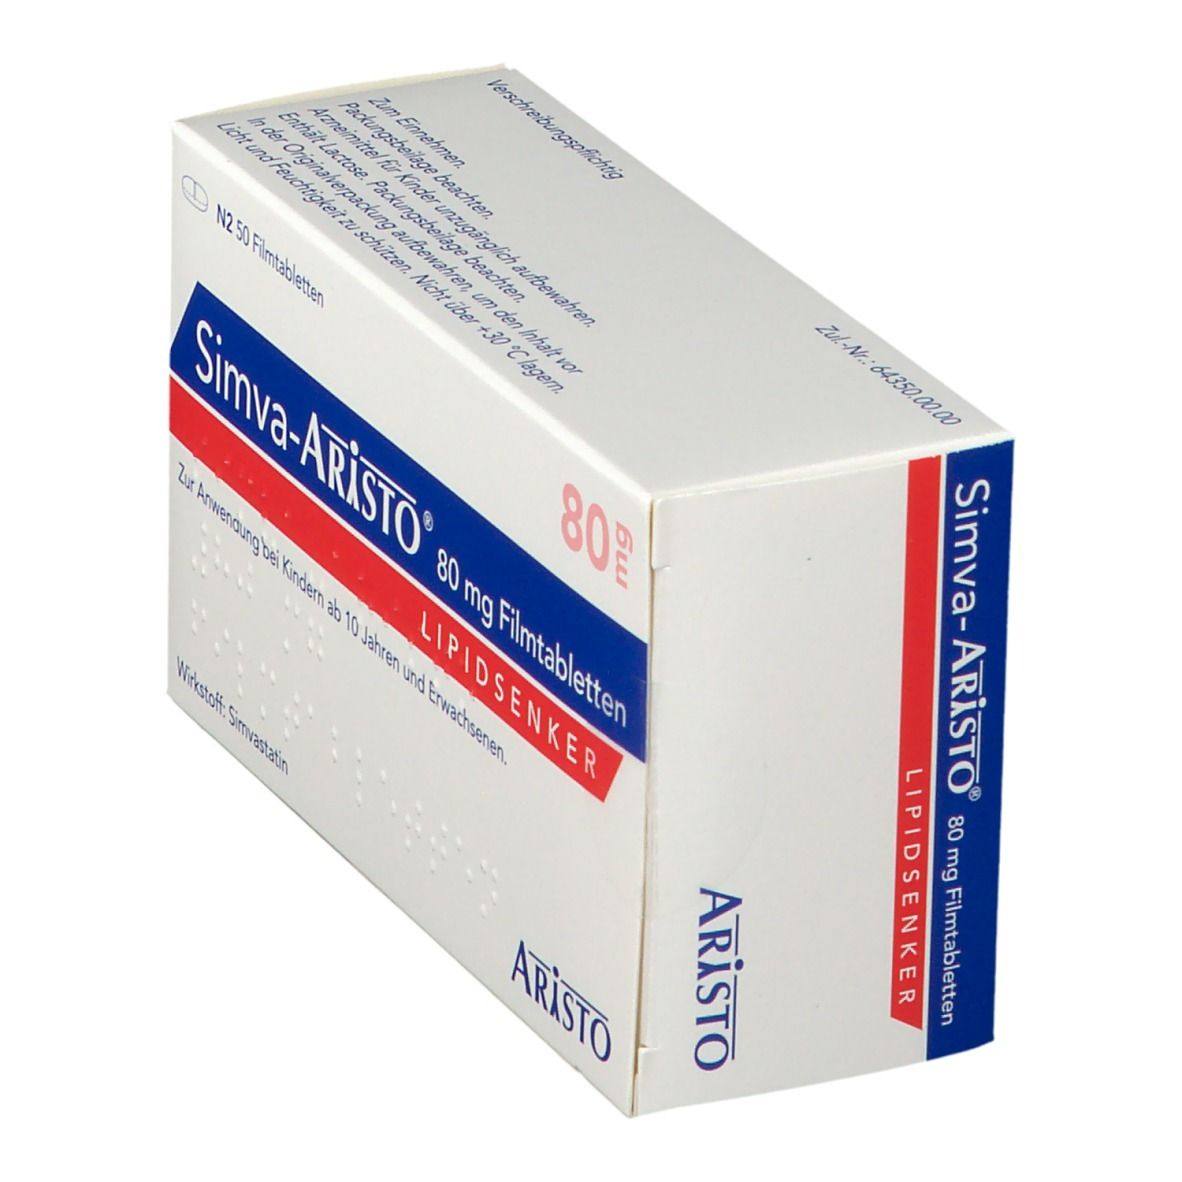 Simva-Aristo® 80 mg